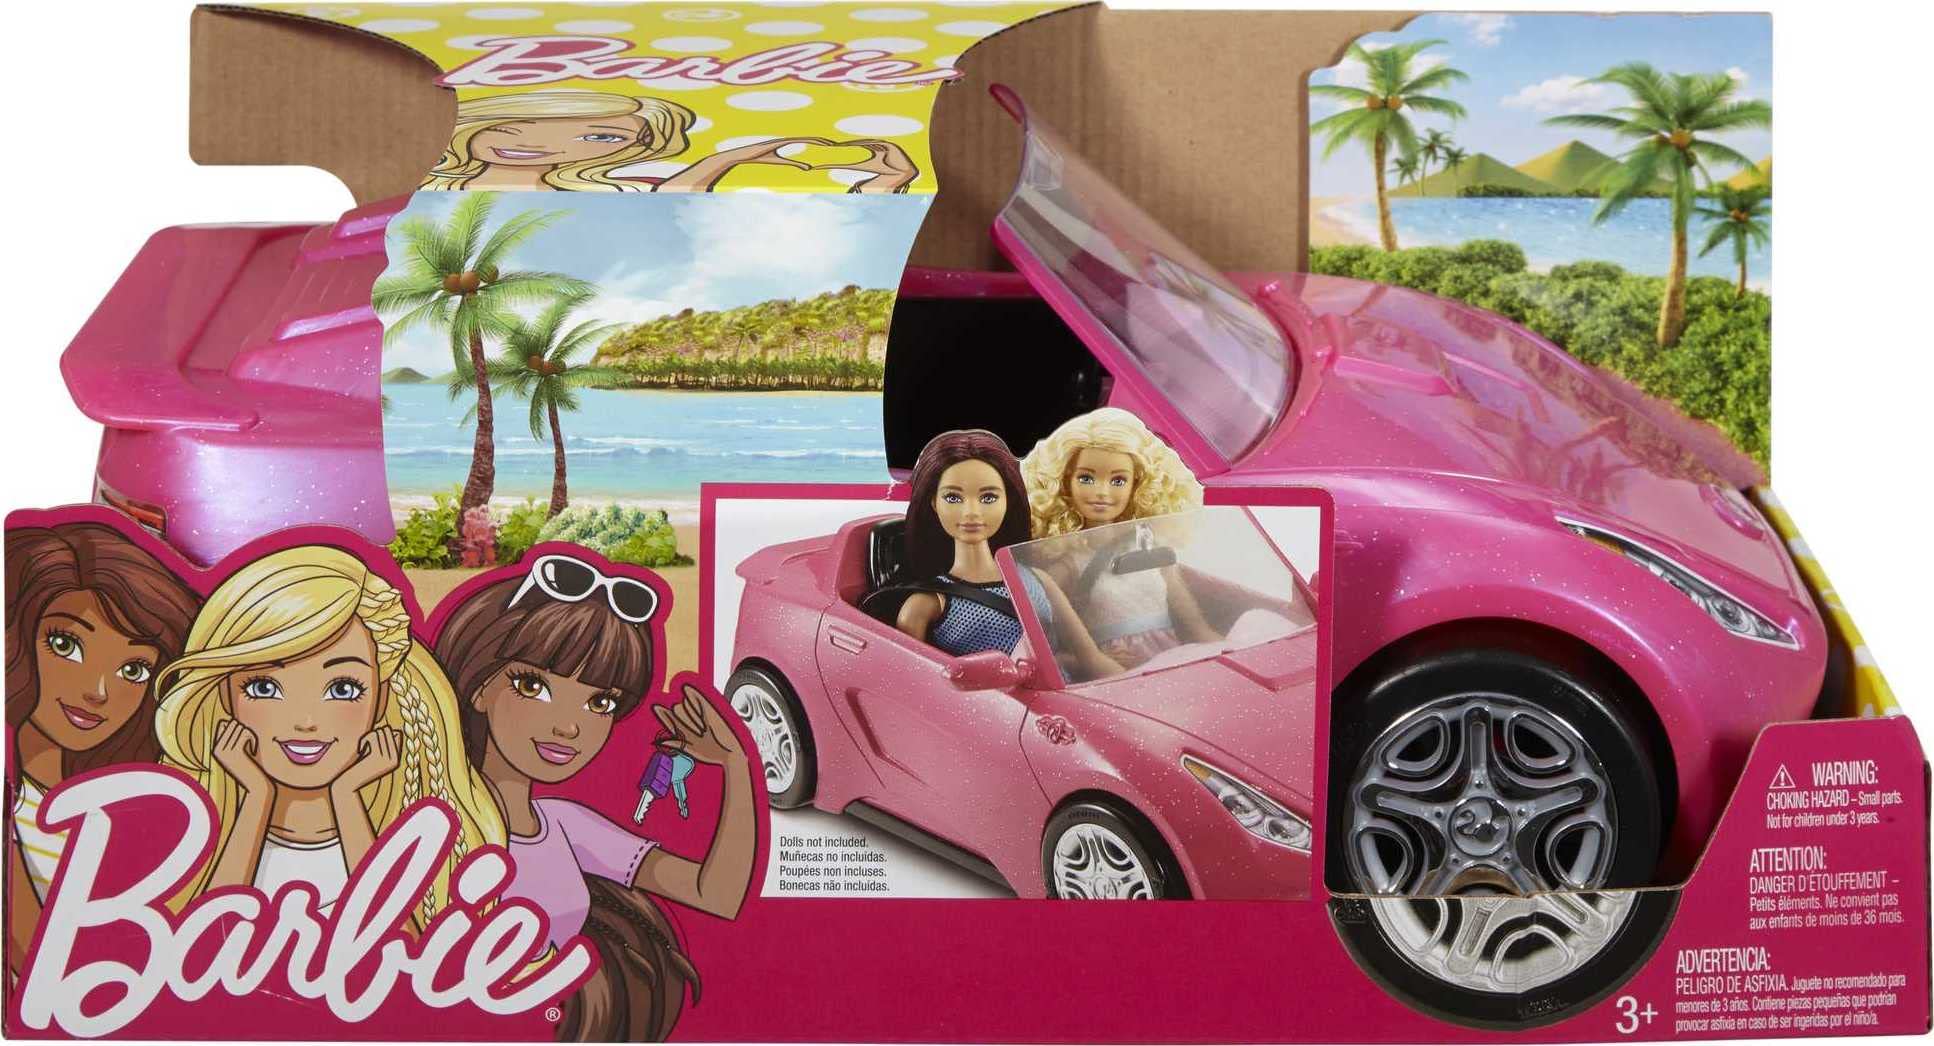 Barbie Convertible